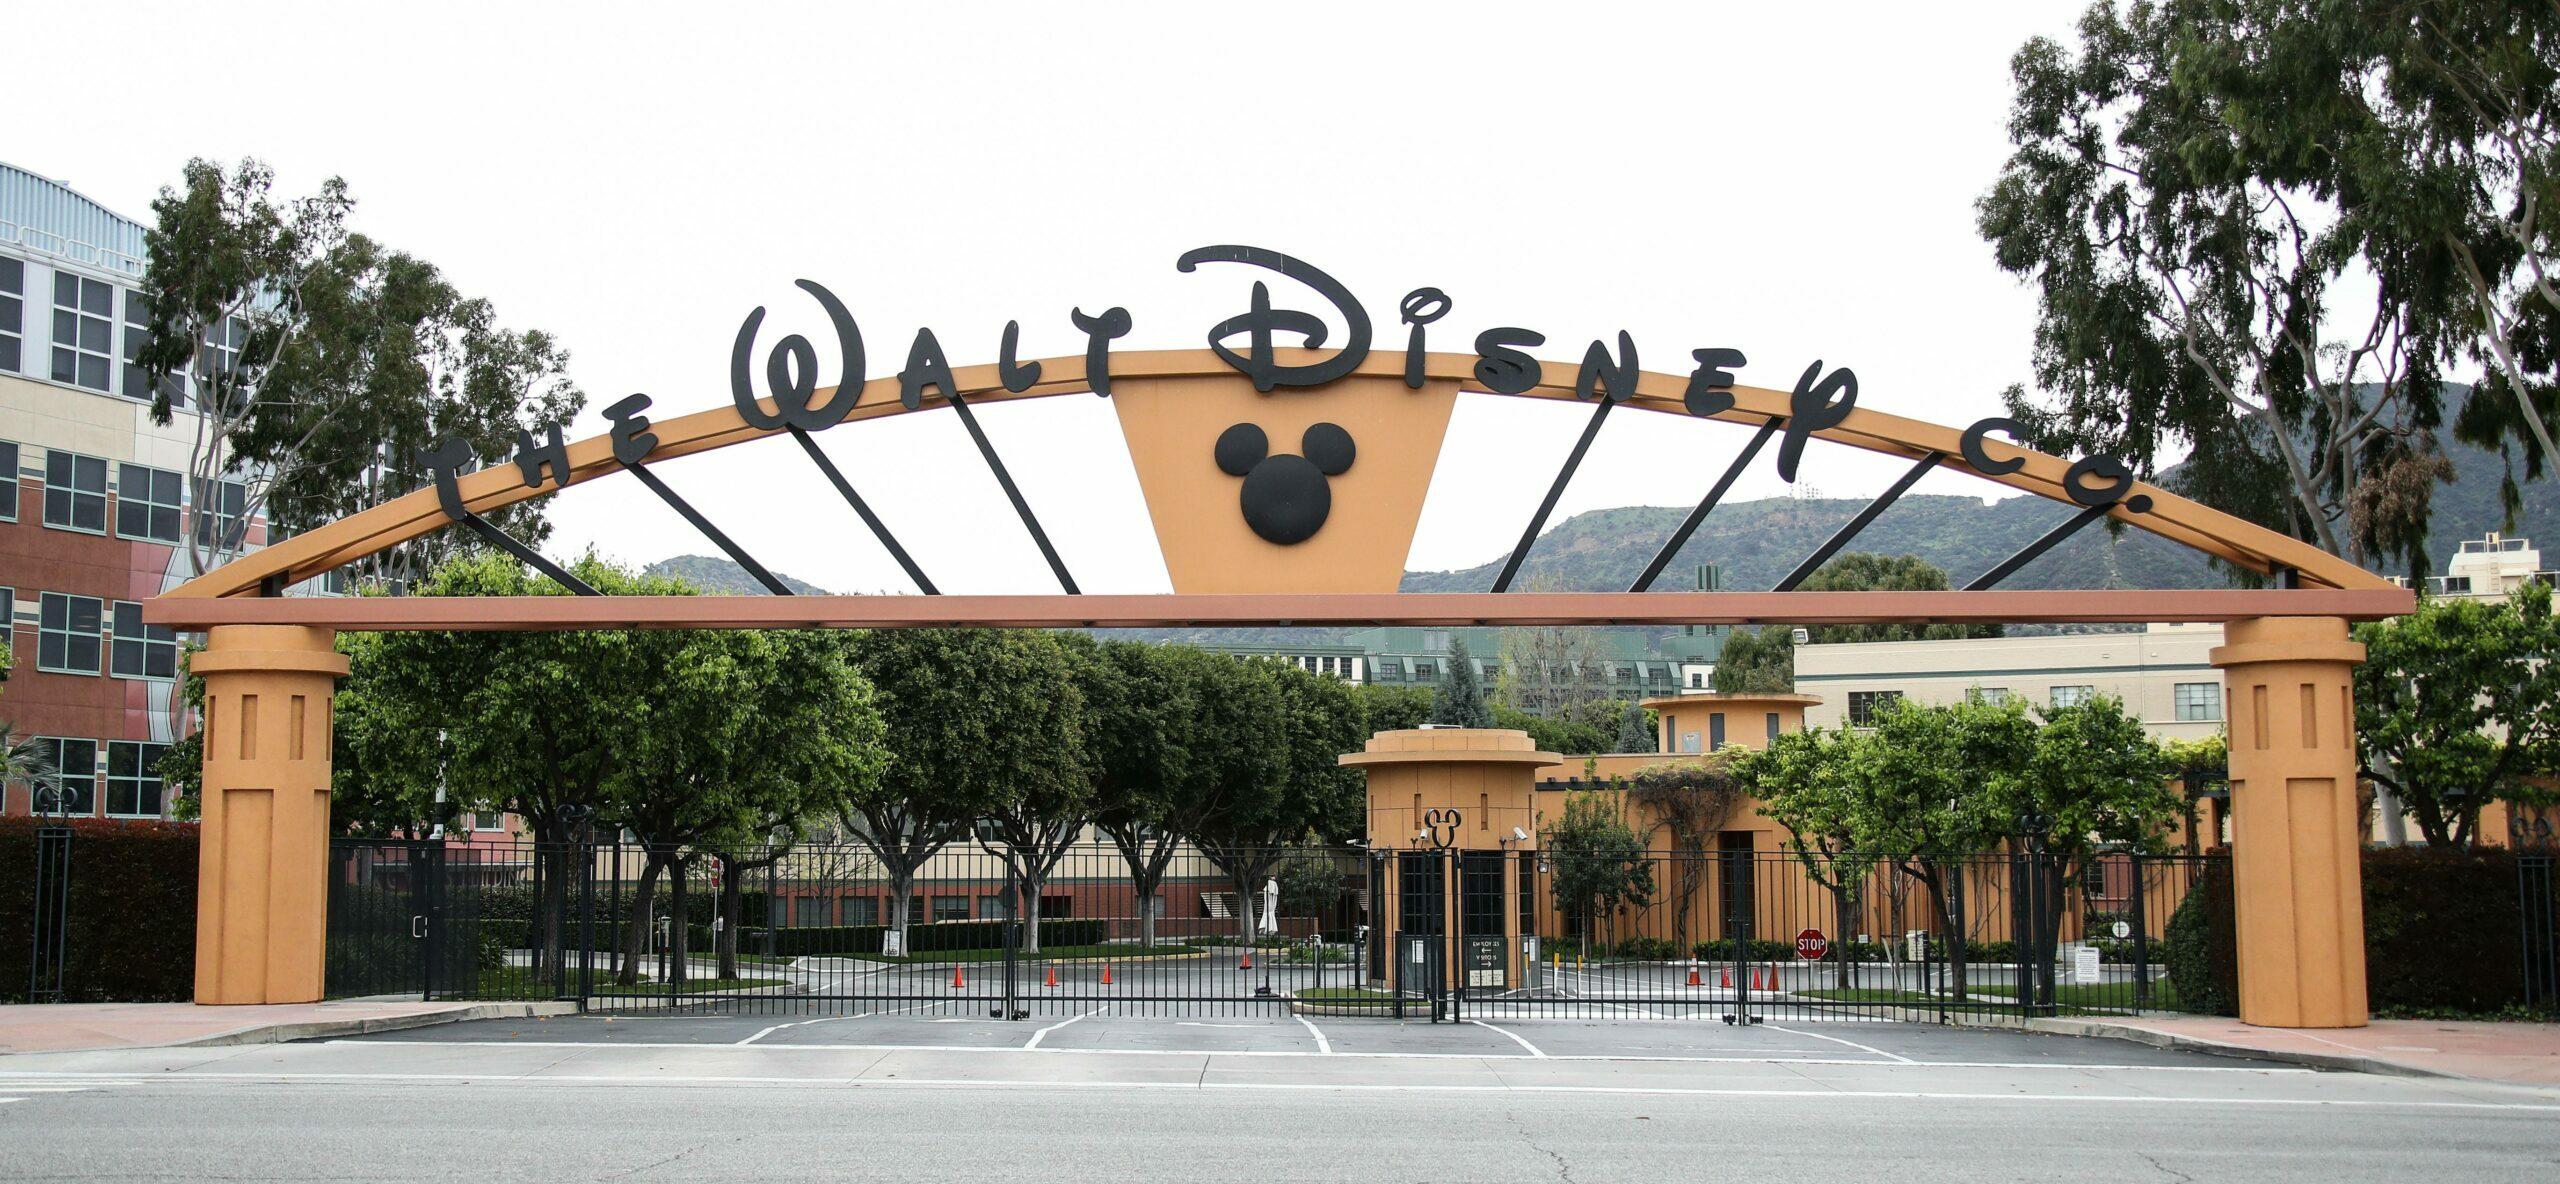 The Walt Disney Company sign